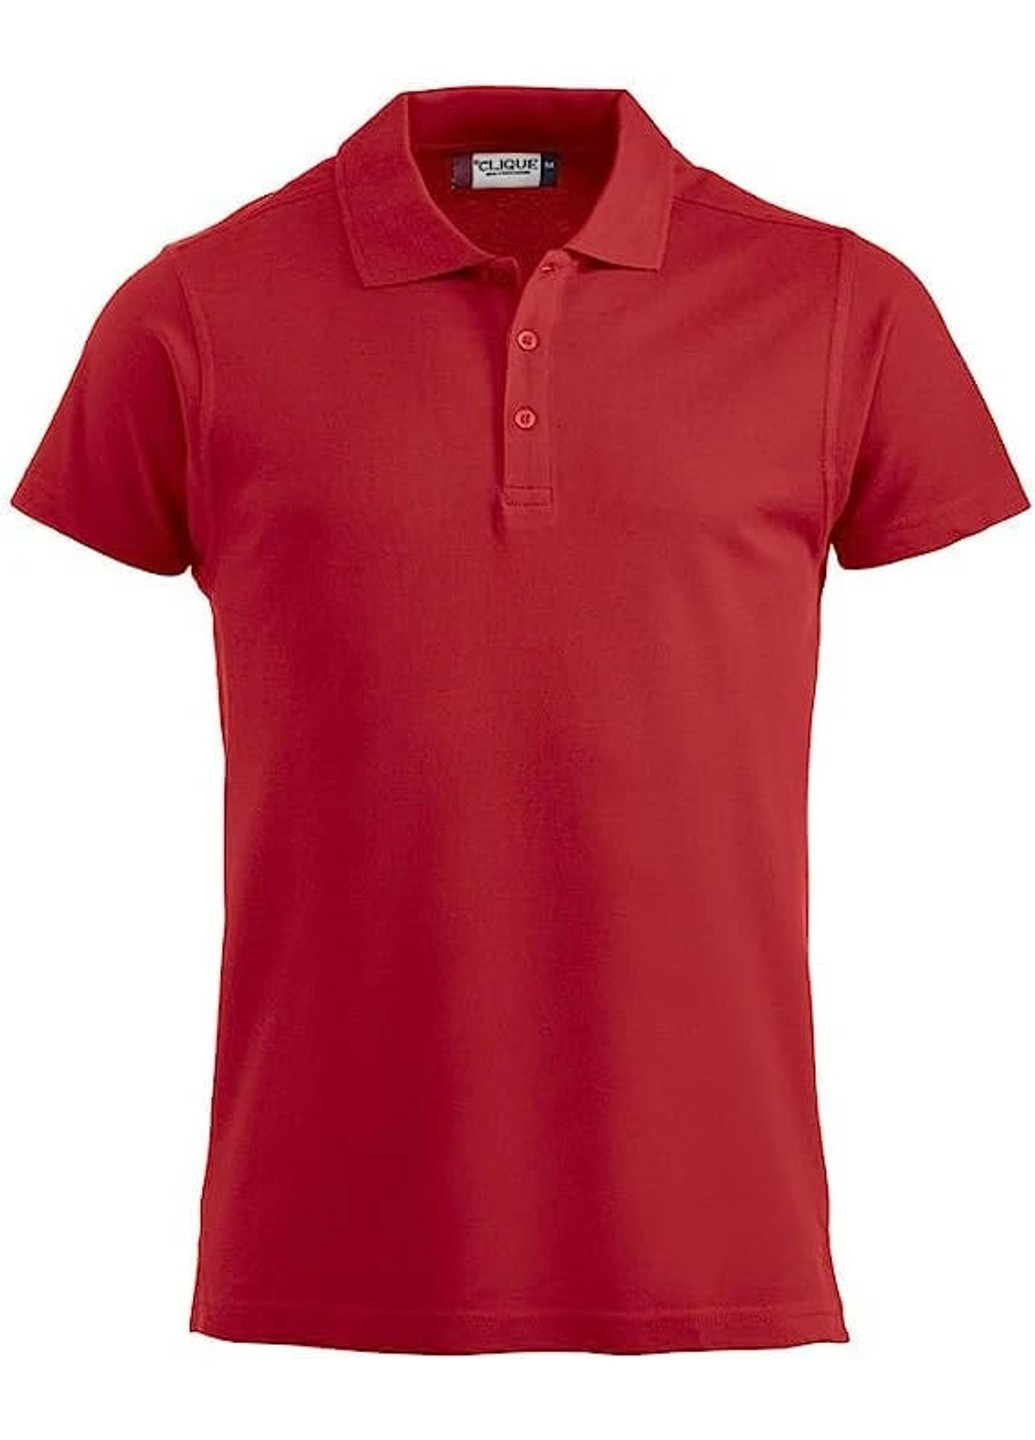 Красная футболка polo style gibson Clique